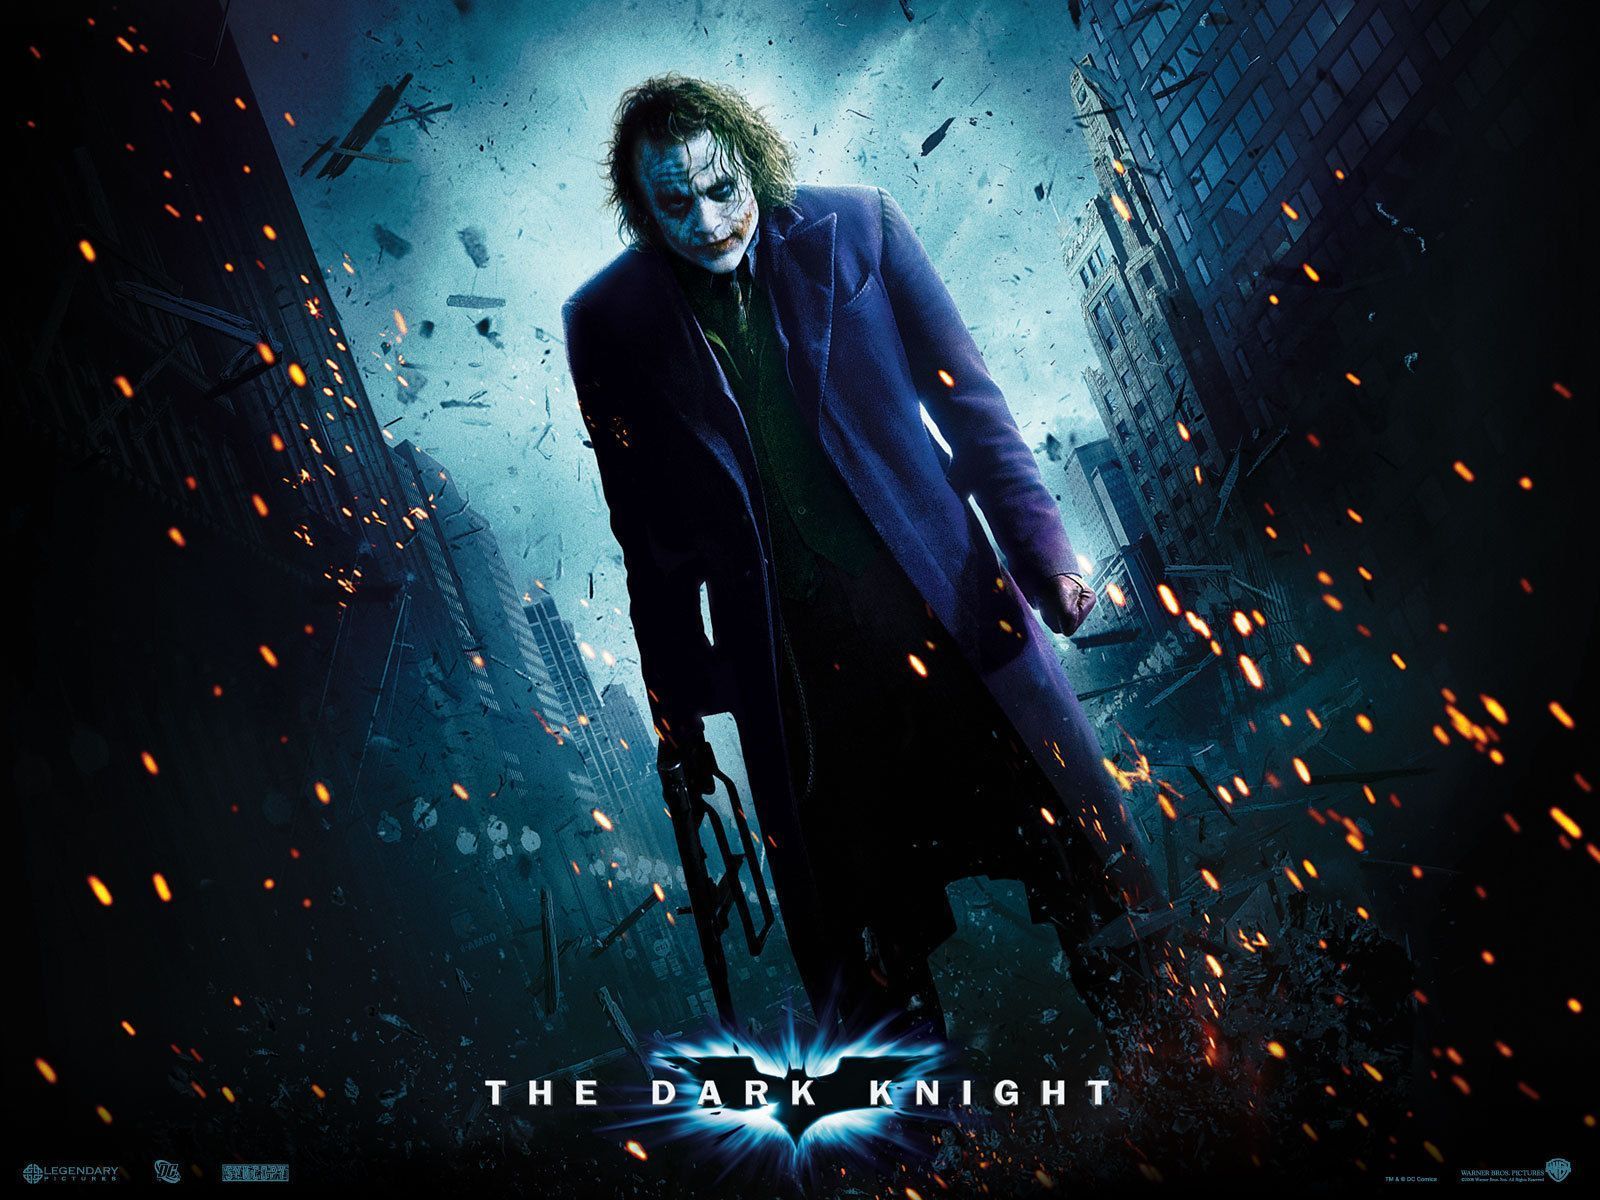 Heath Ledger as The Joker - Gotham City Wallpaper (9970933) - Fanpop